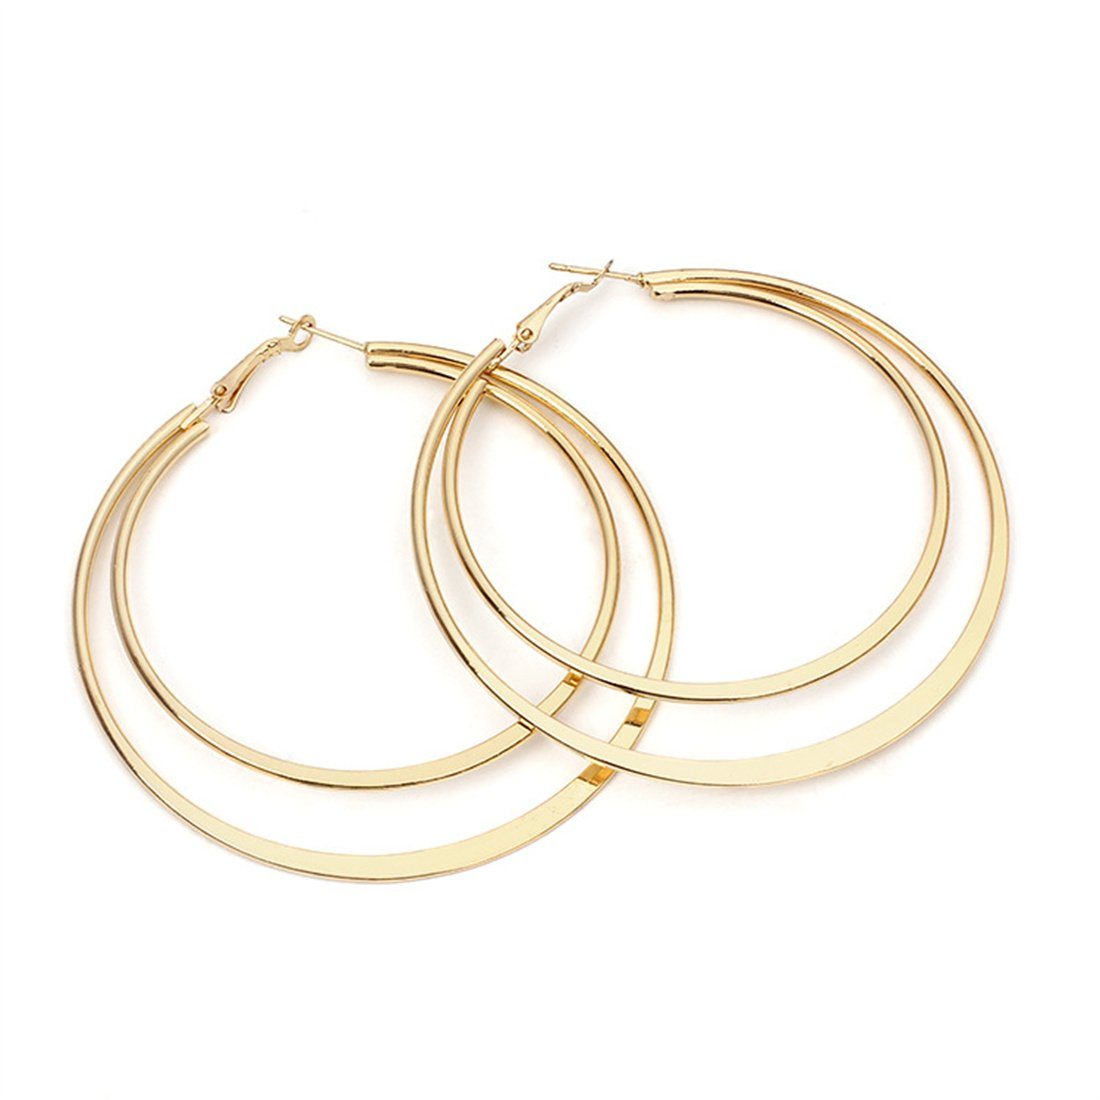 Zubehör Paar Damen DÖRÖY Ohrring Set, Ohrstecker Kreis übertrieben Metall Gold Ohrring doppelte